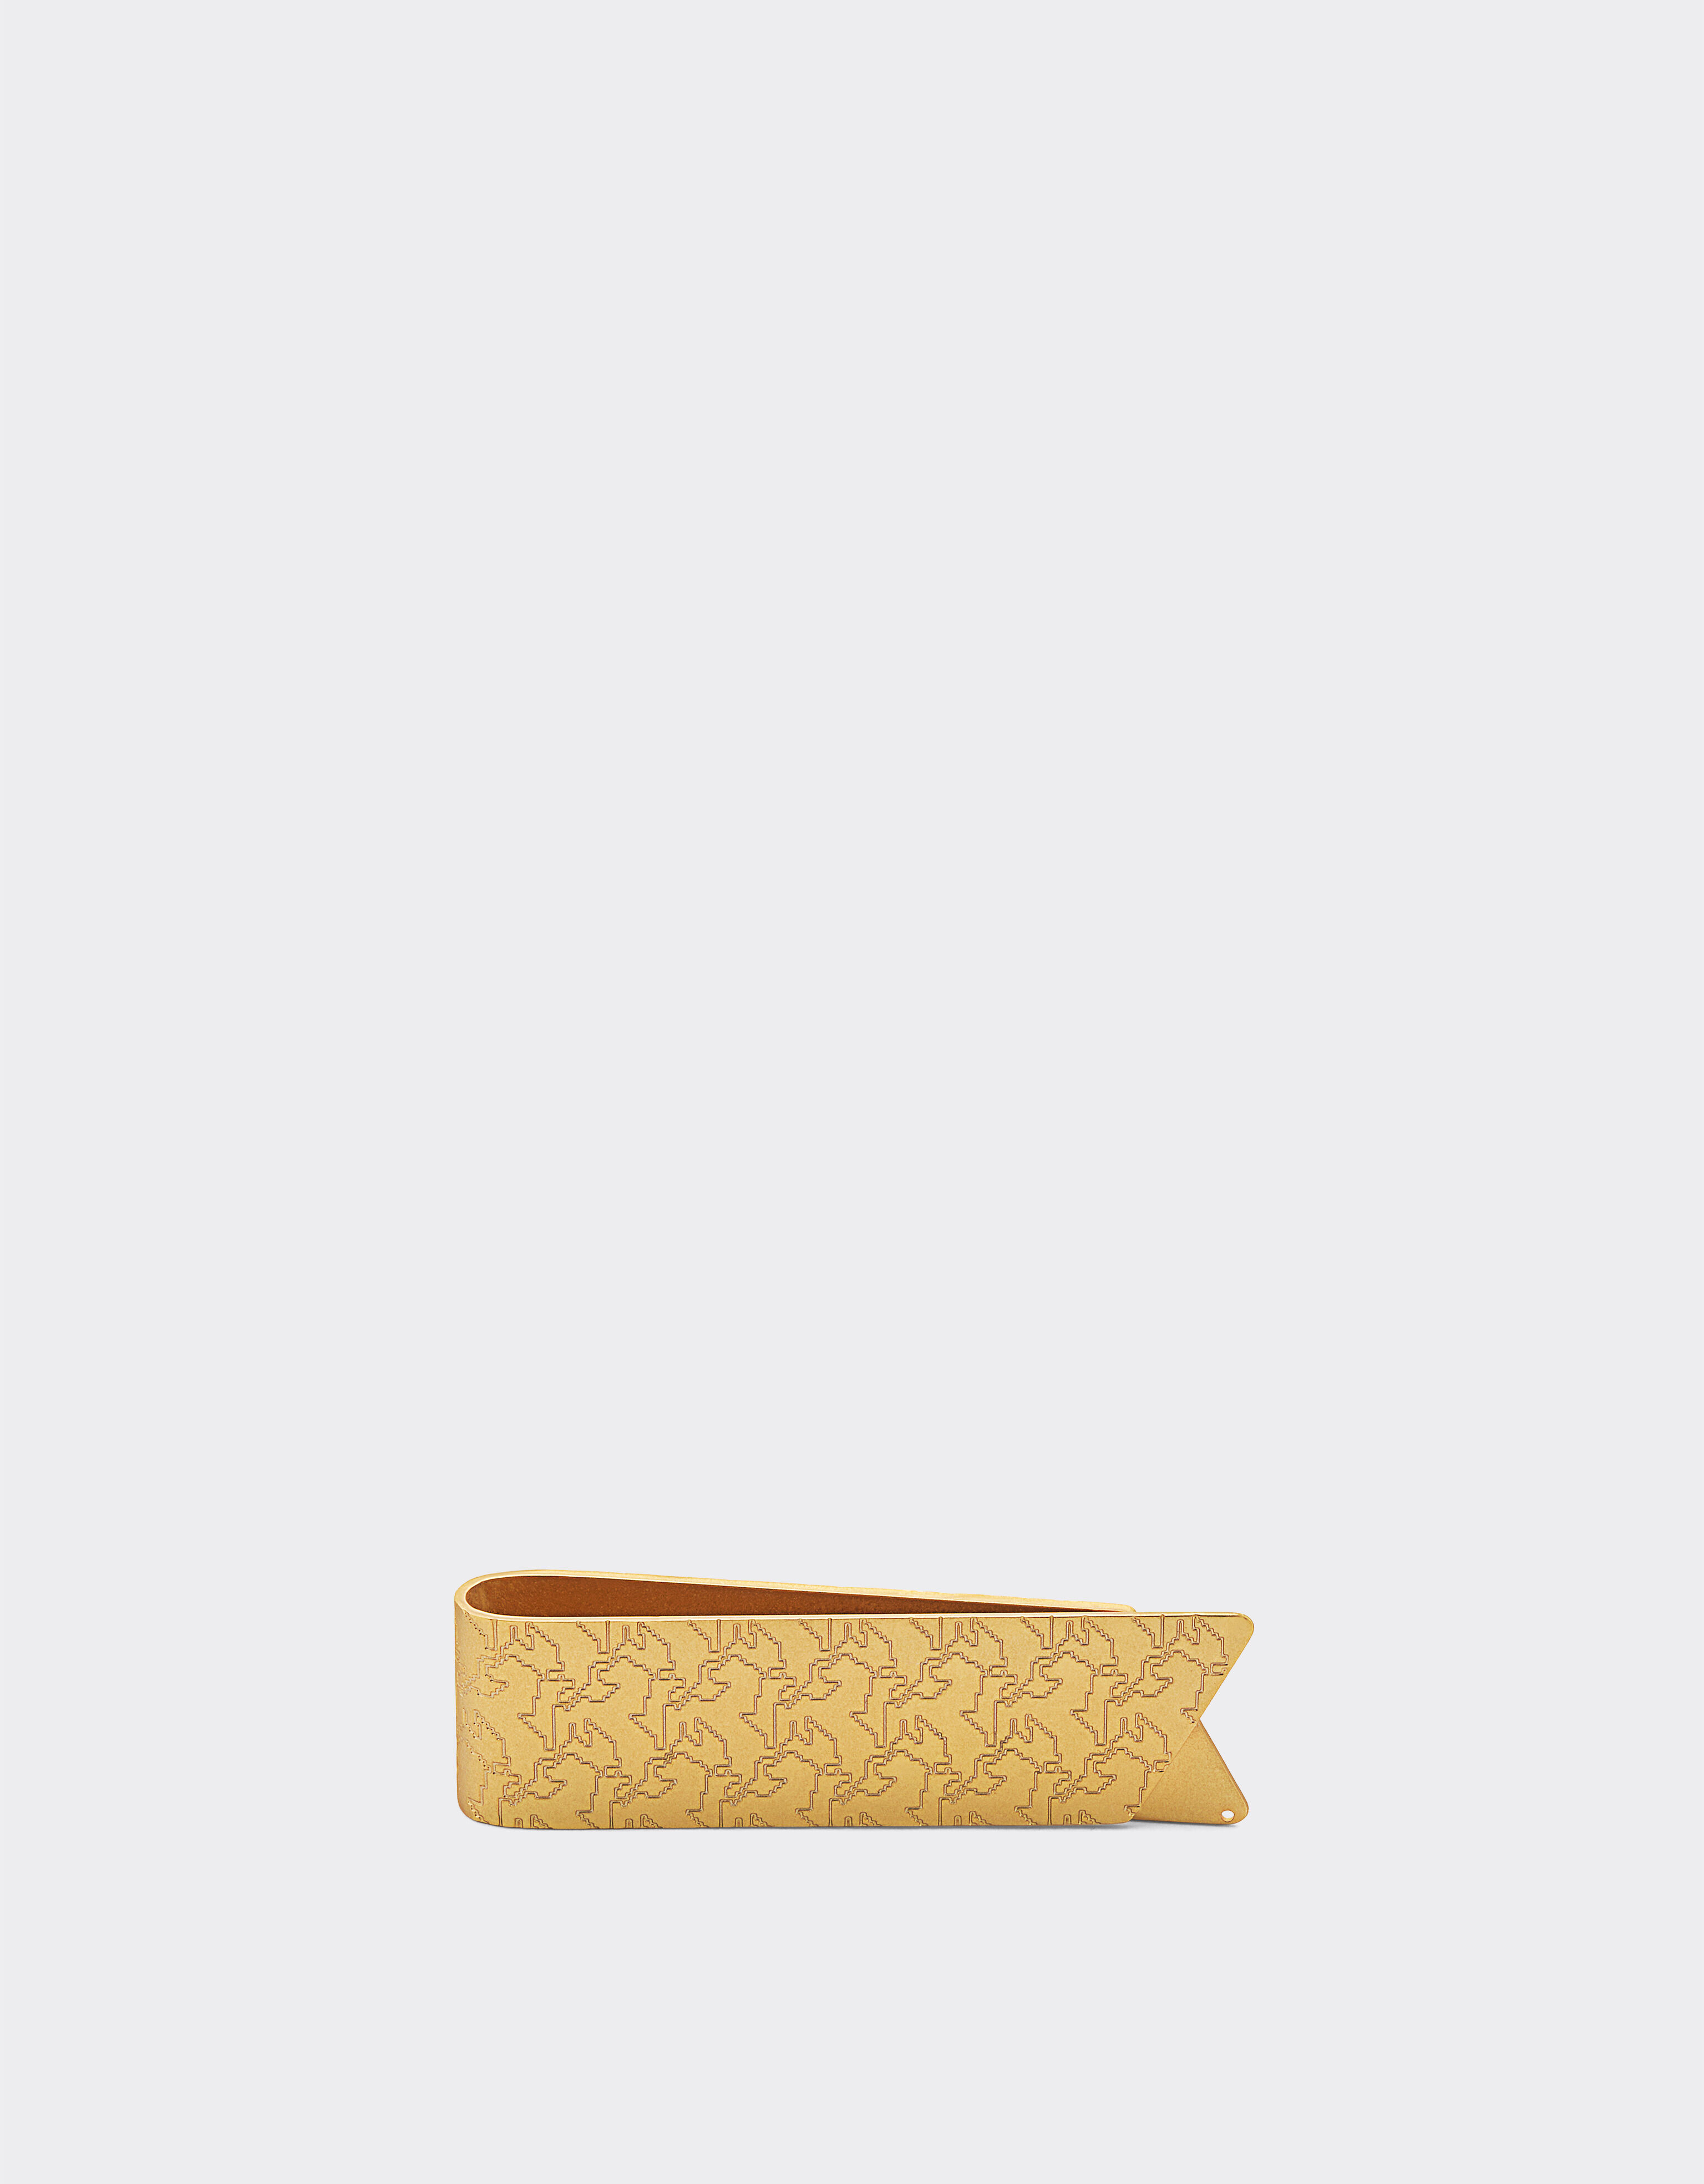 Ferrari Money clip with Prancing Horse motif Gold 20219f